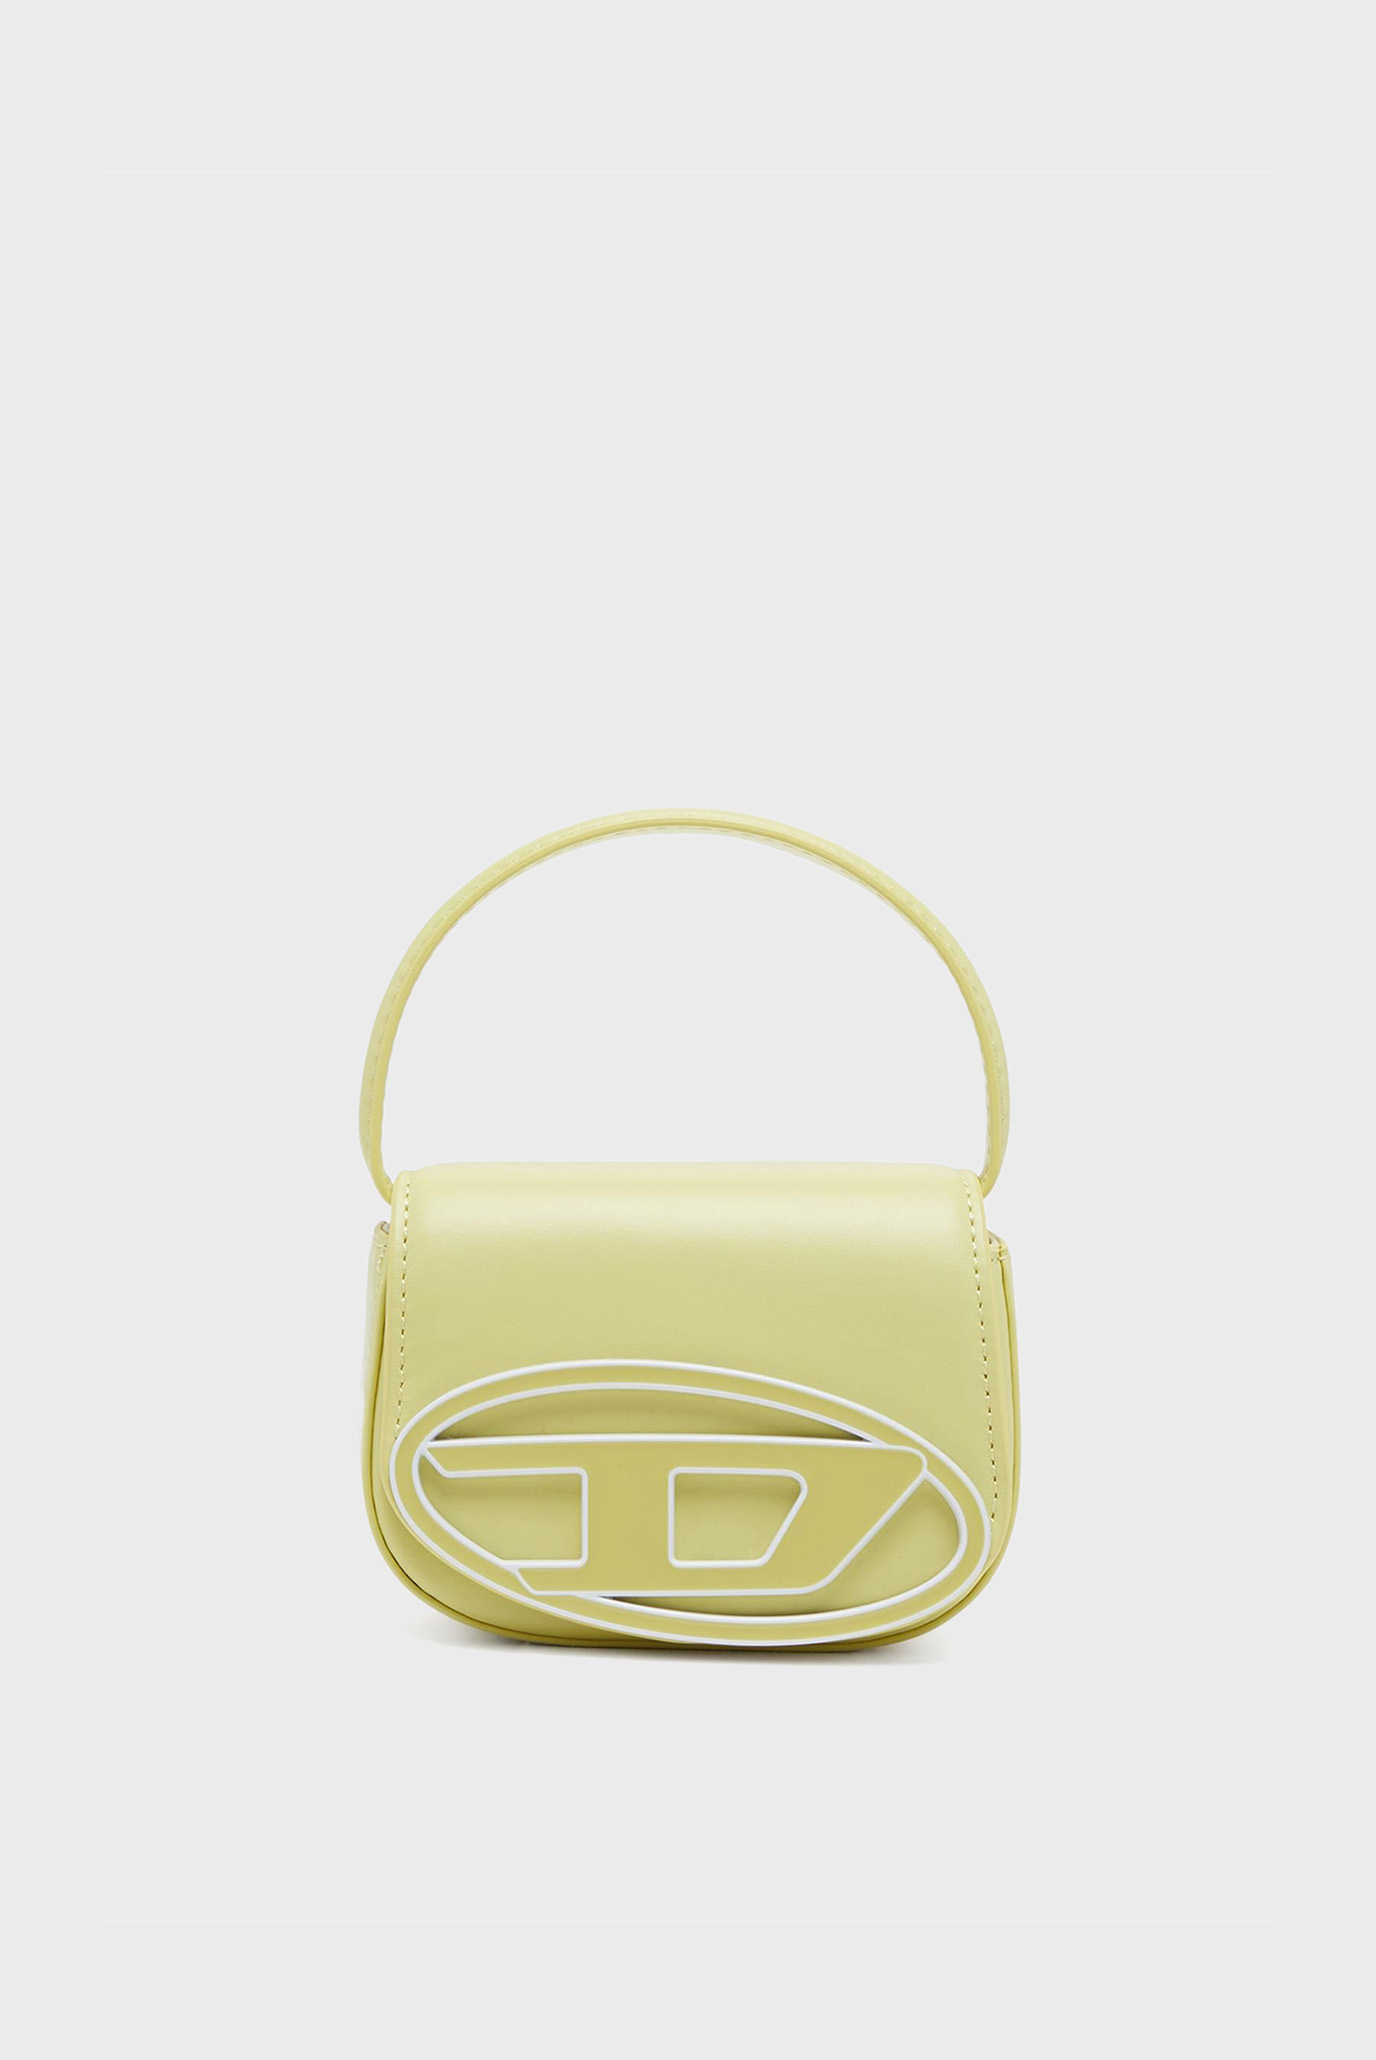 Женская желтая кожаная сумка 1DR XS 1